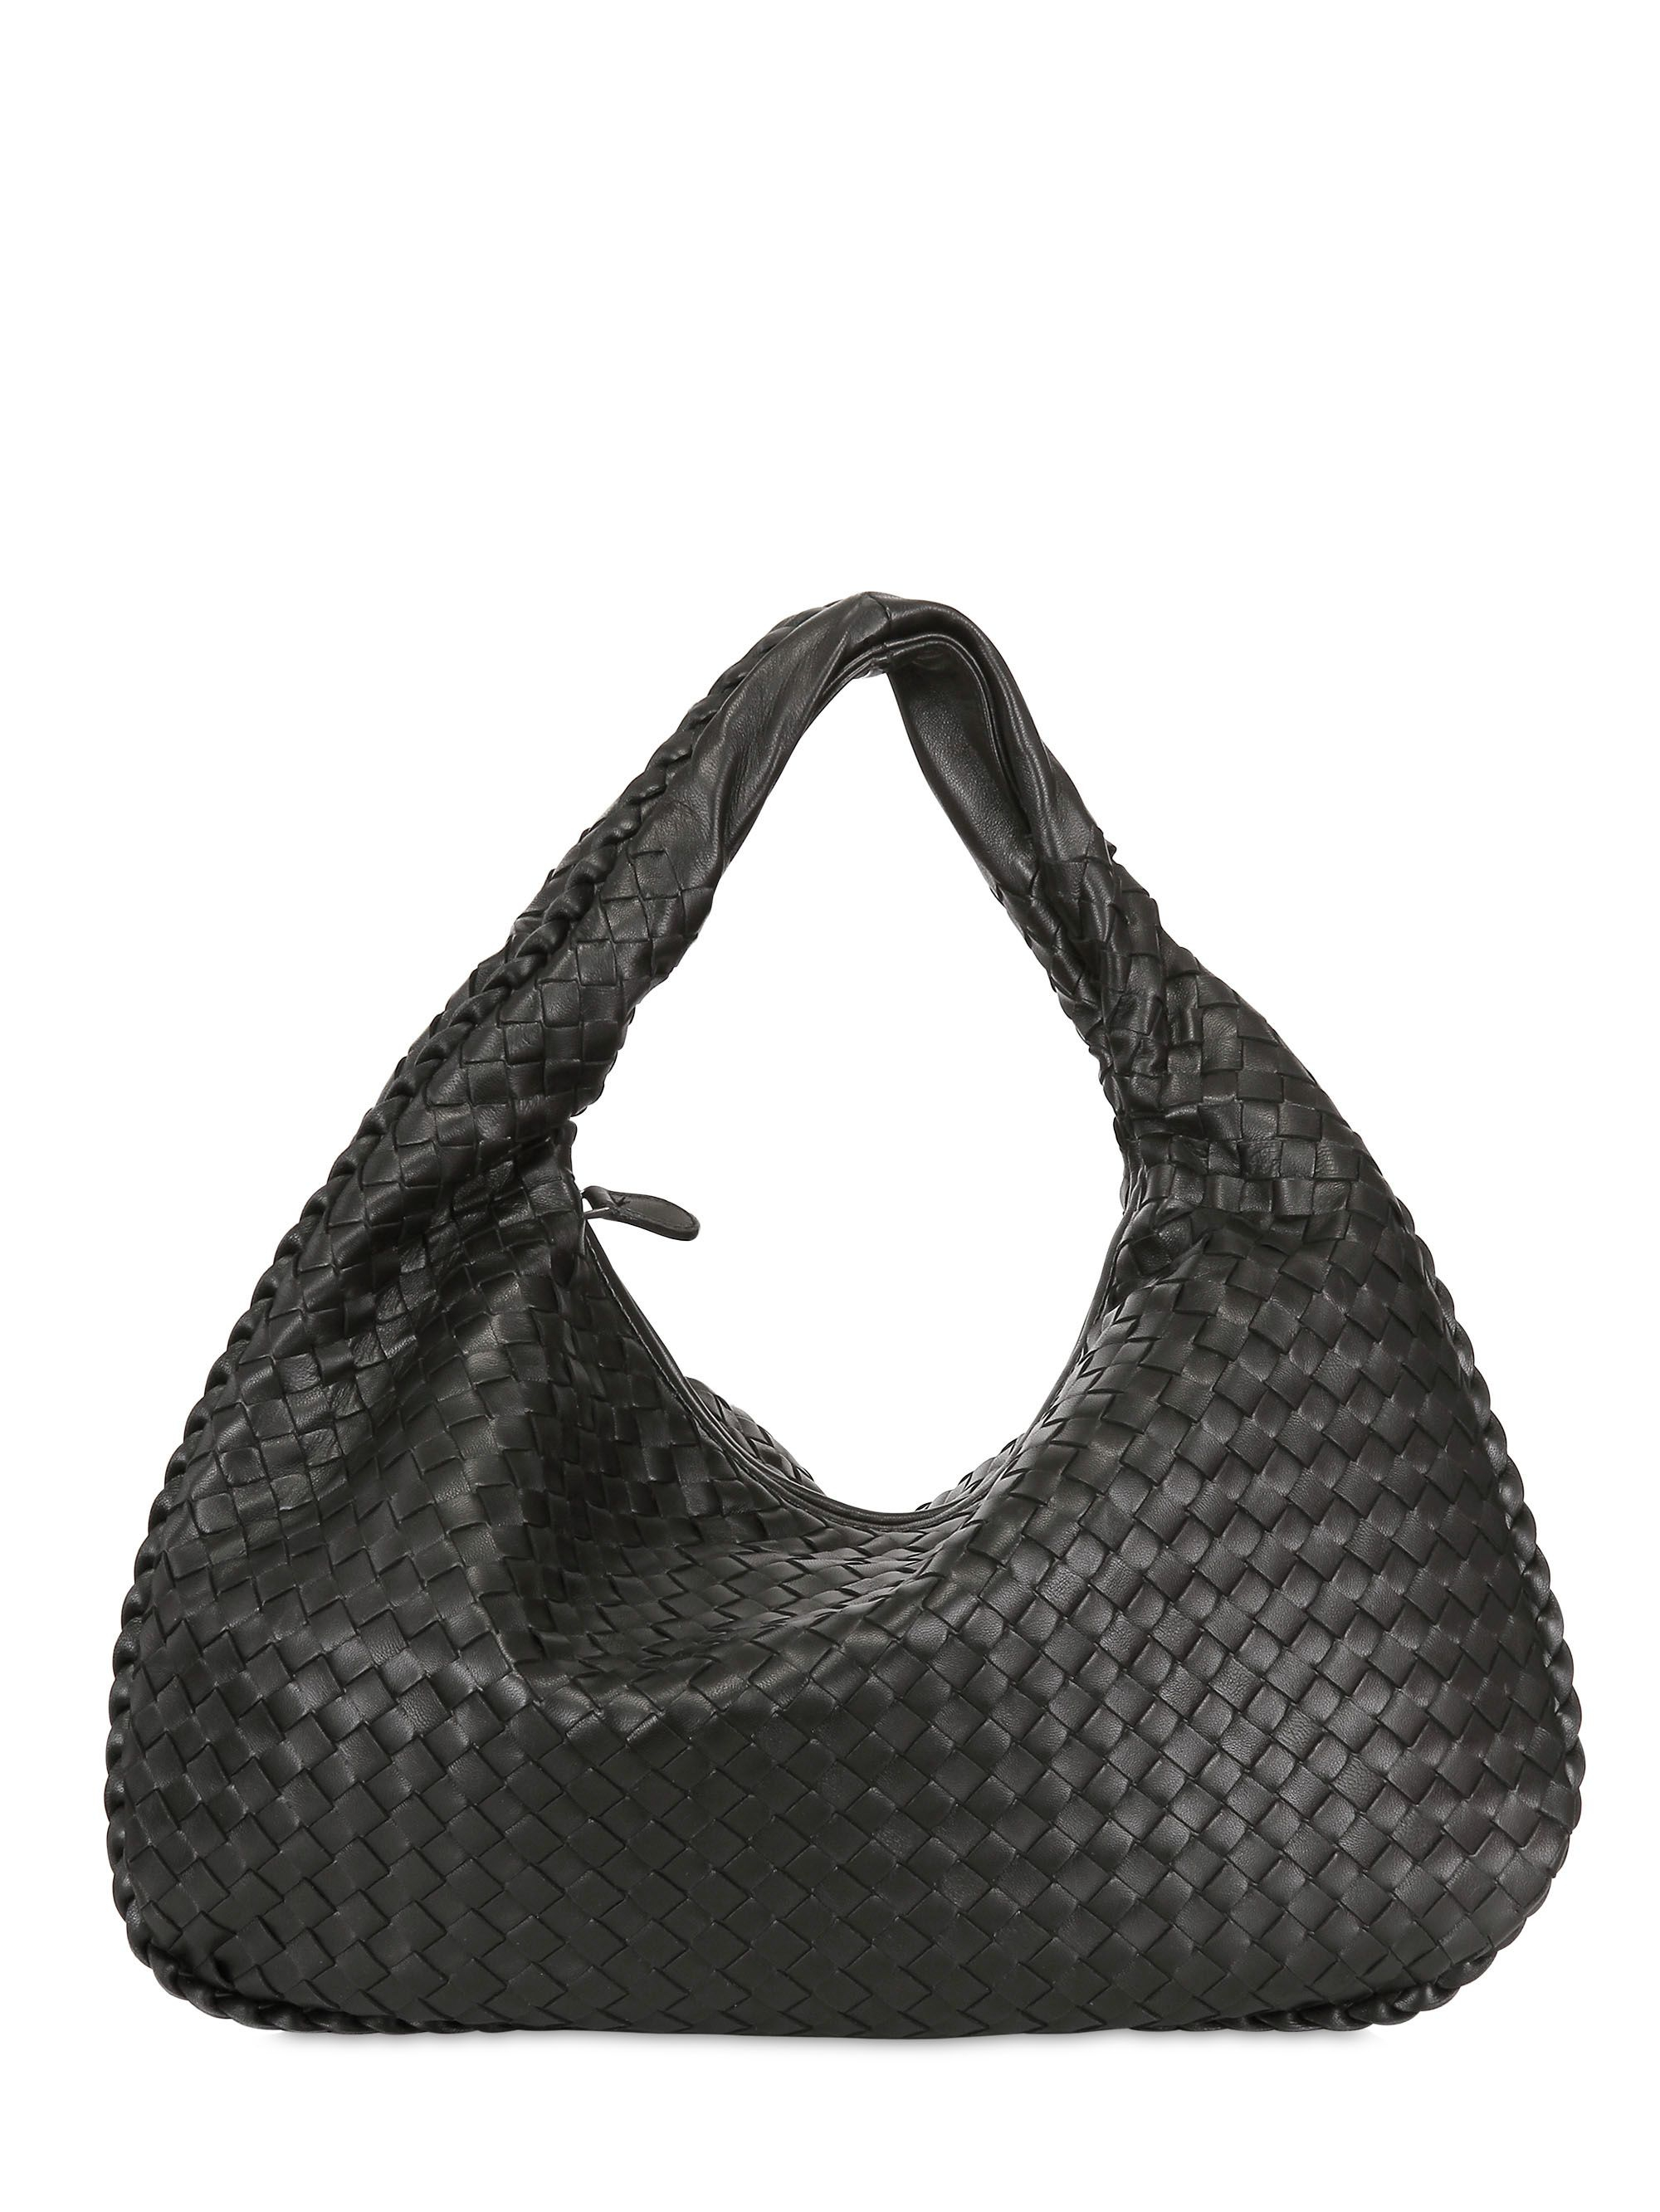 Bottega Veneta Medium Veneta Nappa Classic Woven Bag in Black | Lyst